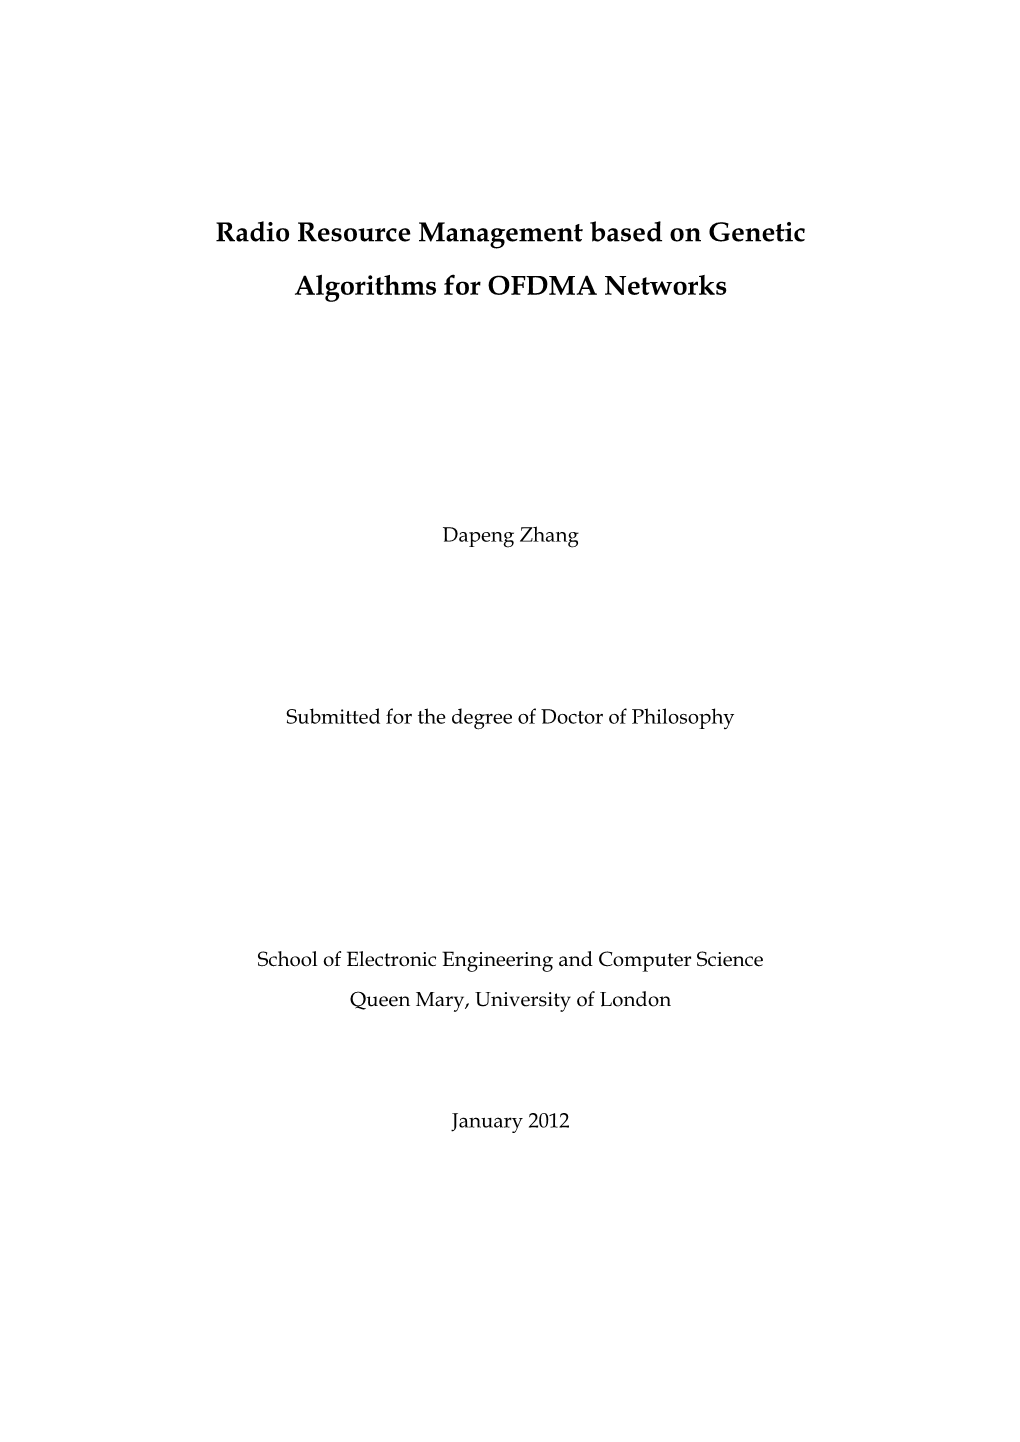 Radio Resource Management Based on Genetic Algorithms for OFDMA Networks